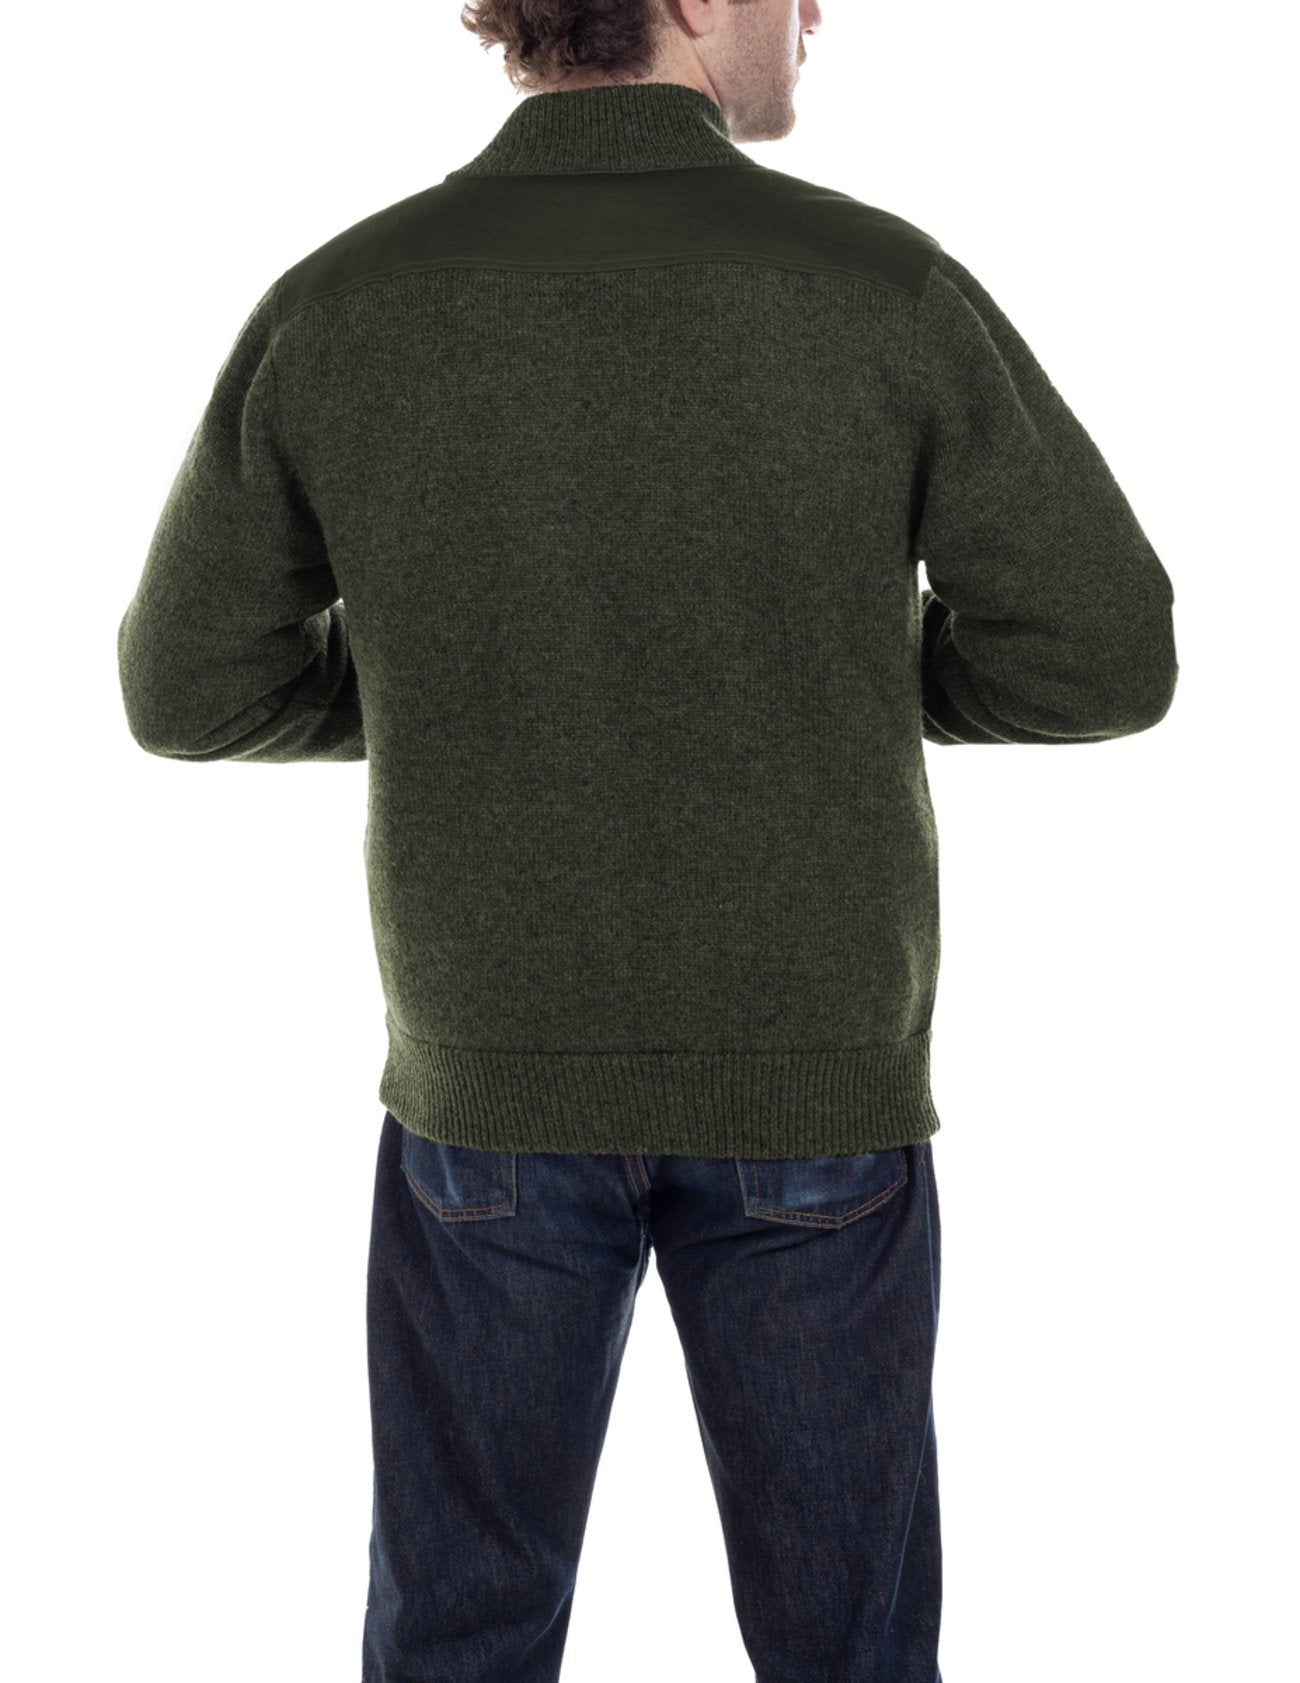 Wool Blend Military Sweater Jacket - Moss